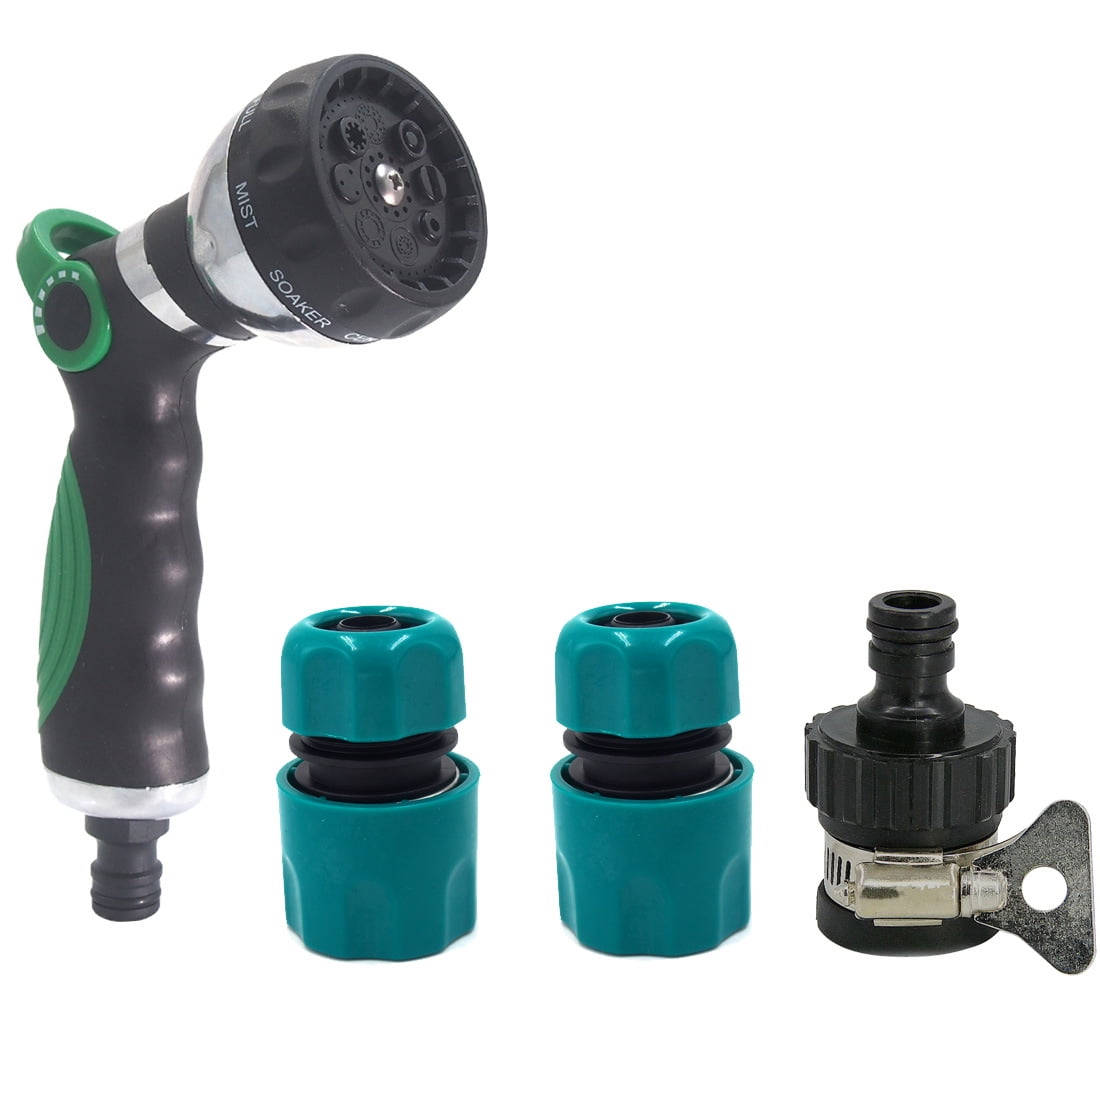 Rotating Head Water Spray Washer Gun 8 Pattern Adjustable Hose Nozzle Sprinklers